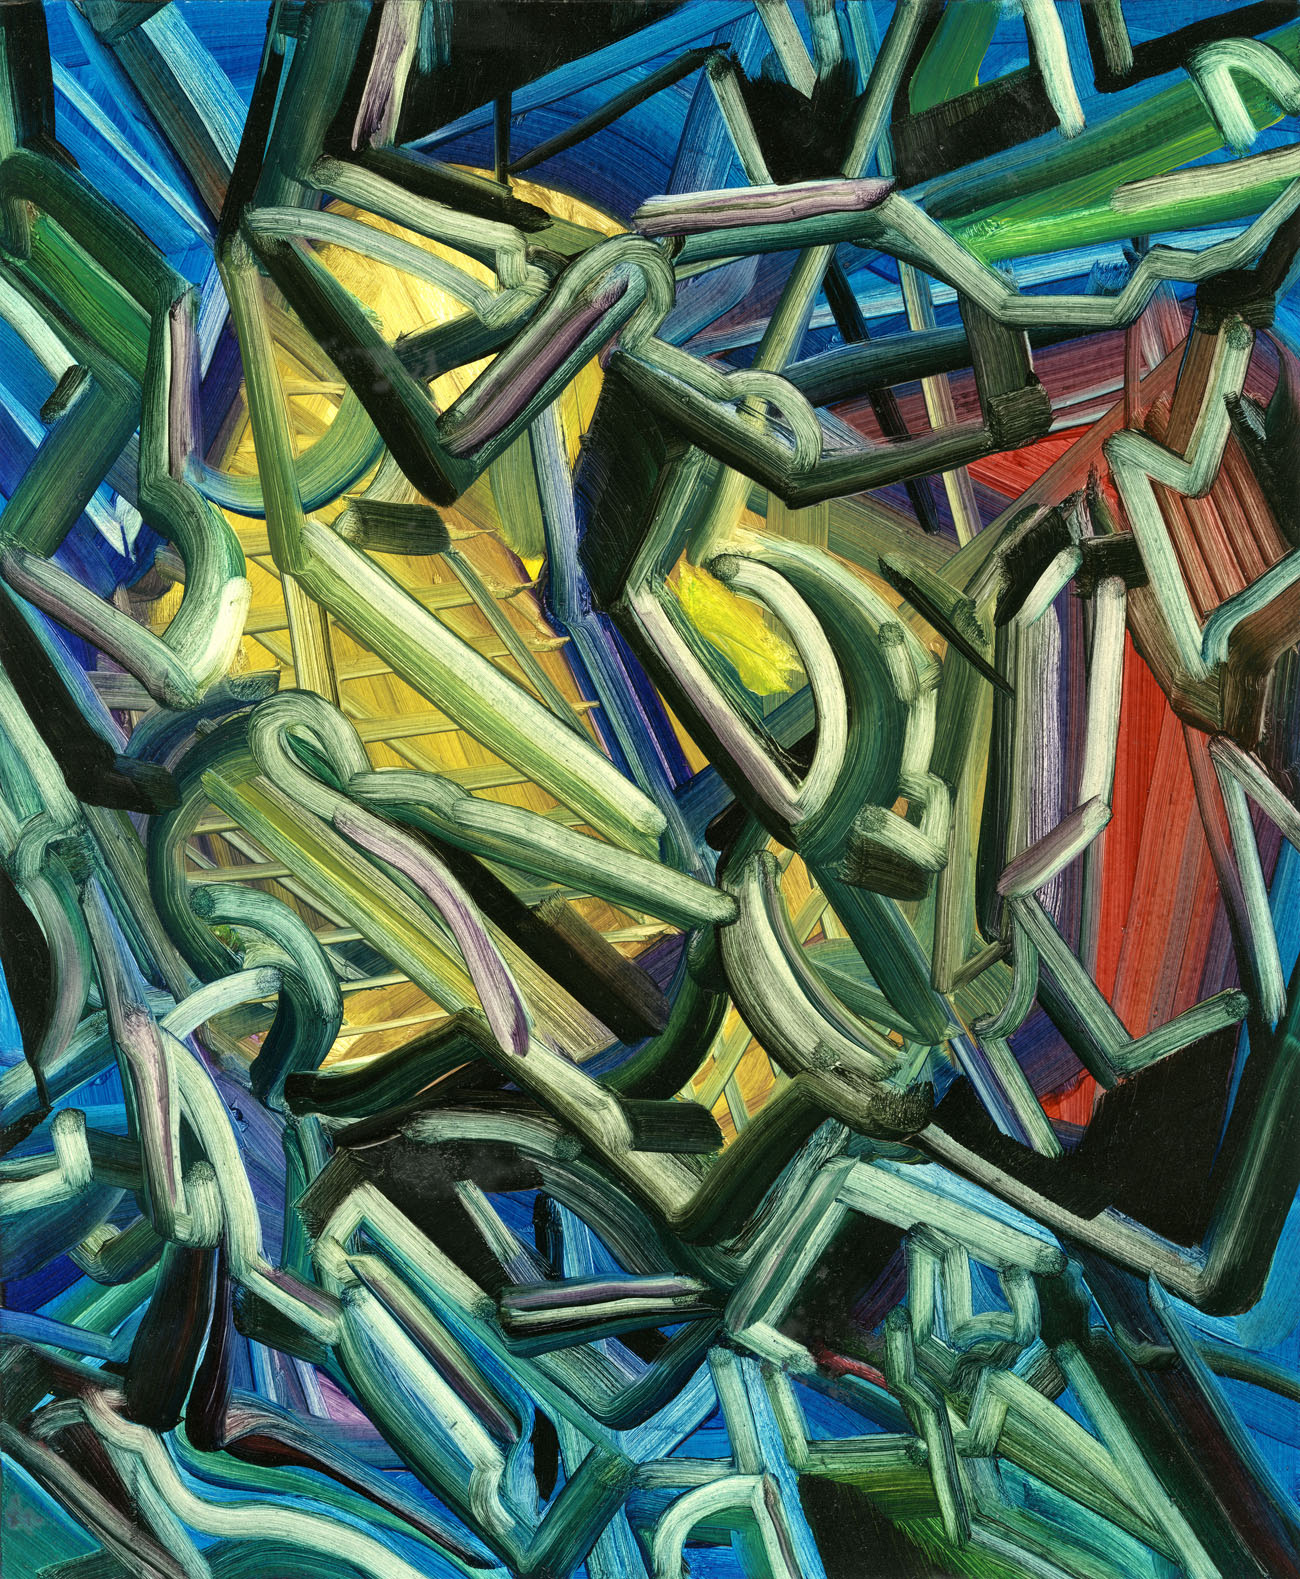 Andy Harper - Load, Oil on paper, 28 x 23 cm, 2015